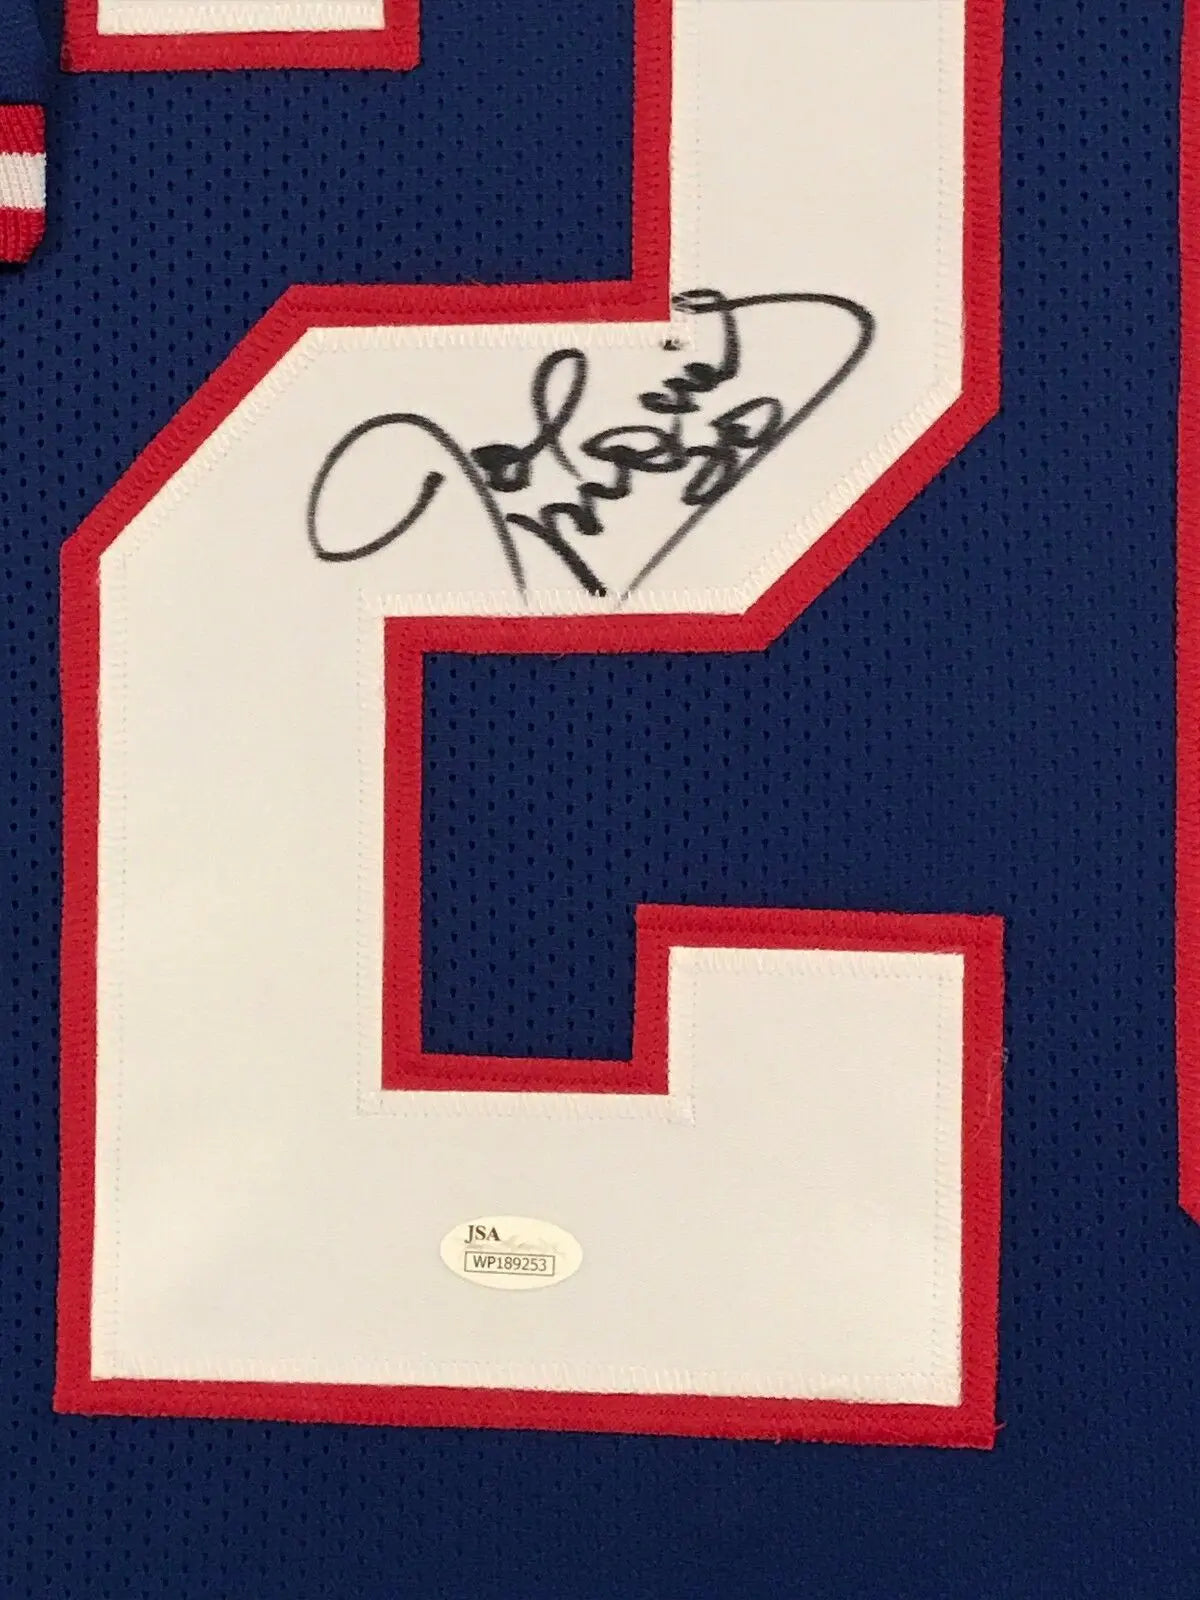 MVP Authentics Framed Joe Morris Autographed Signed New York Giants Jersey Jsa Coa 360 sports jersey framing , jersey framing